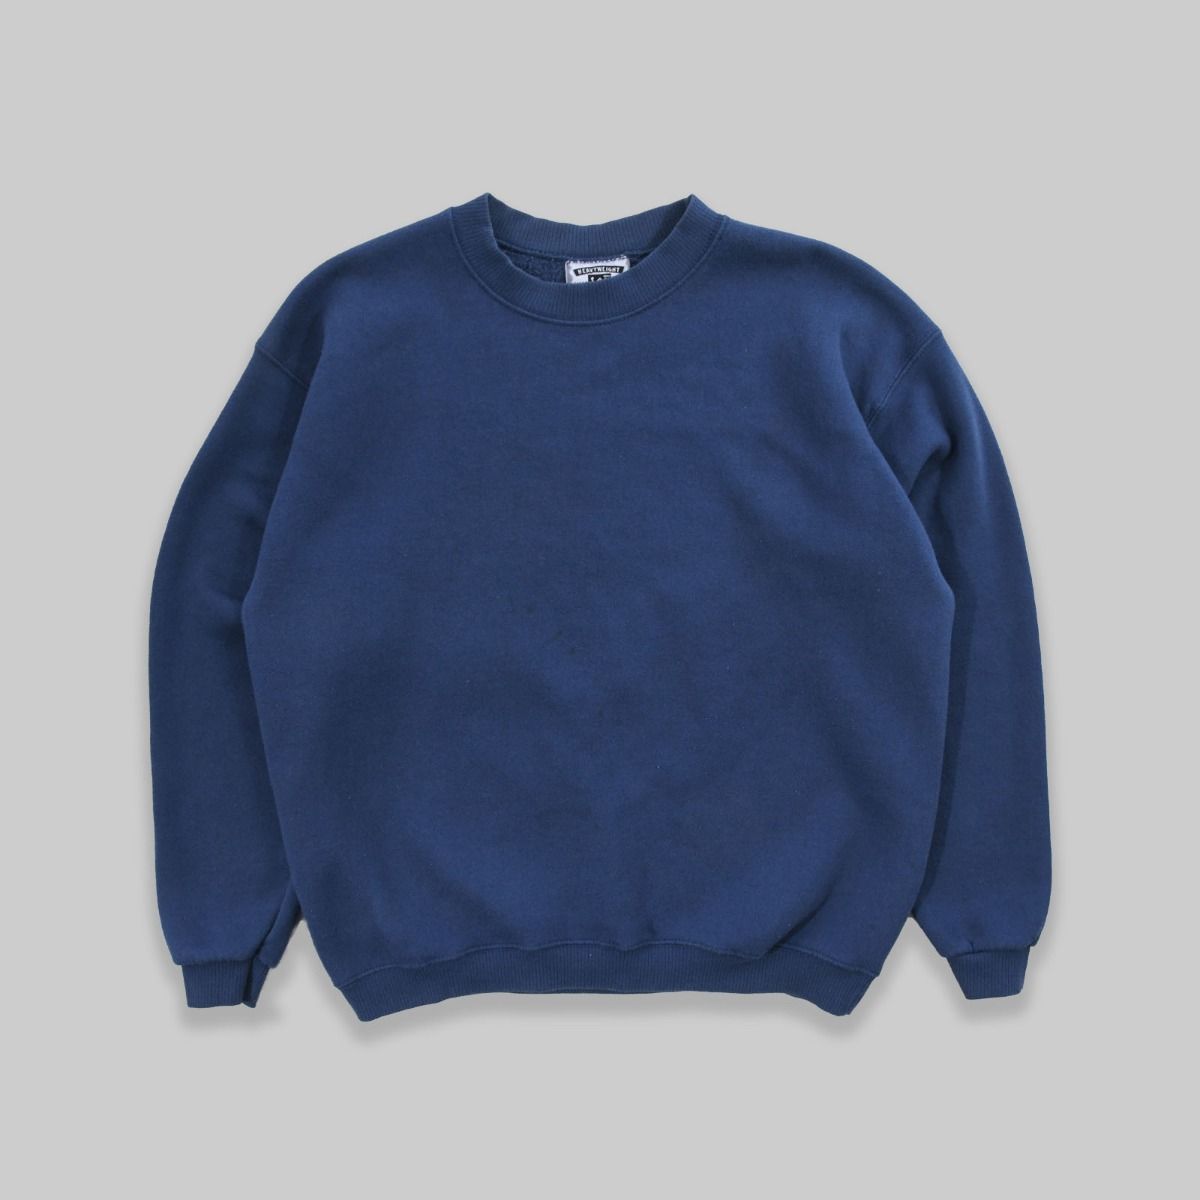 Lee 1990s Blank Blue Sweatshirt